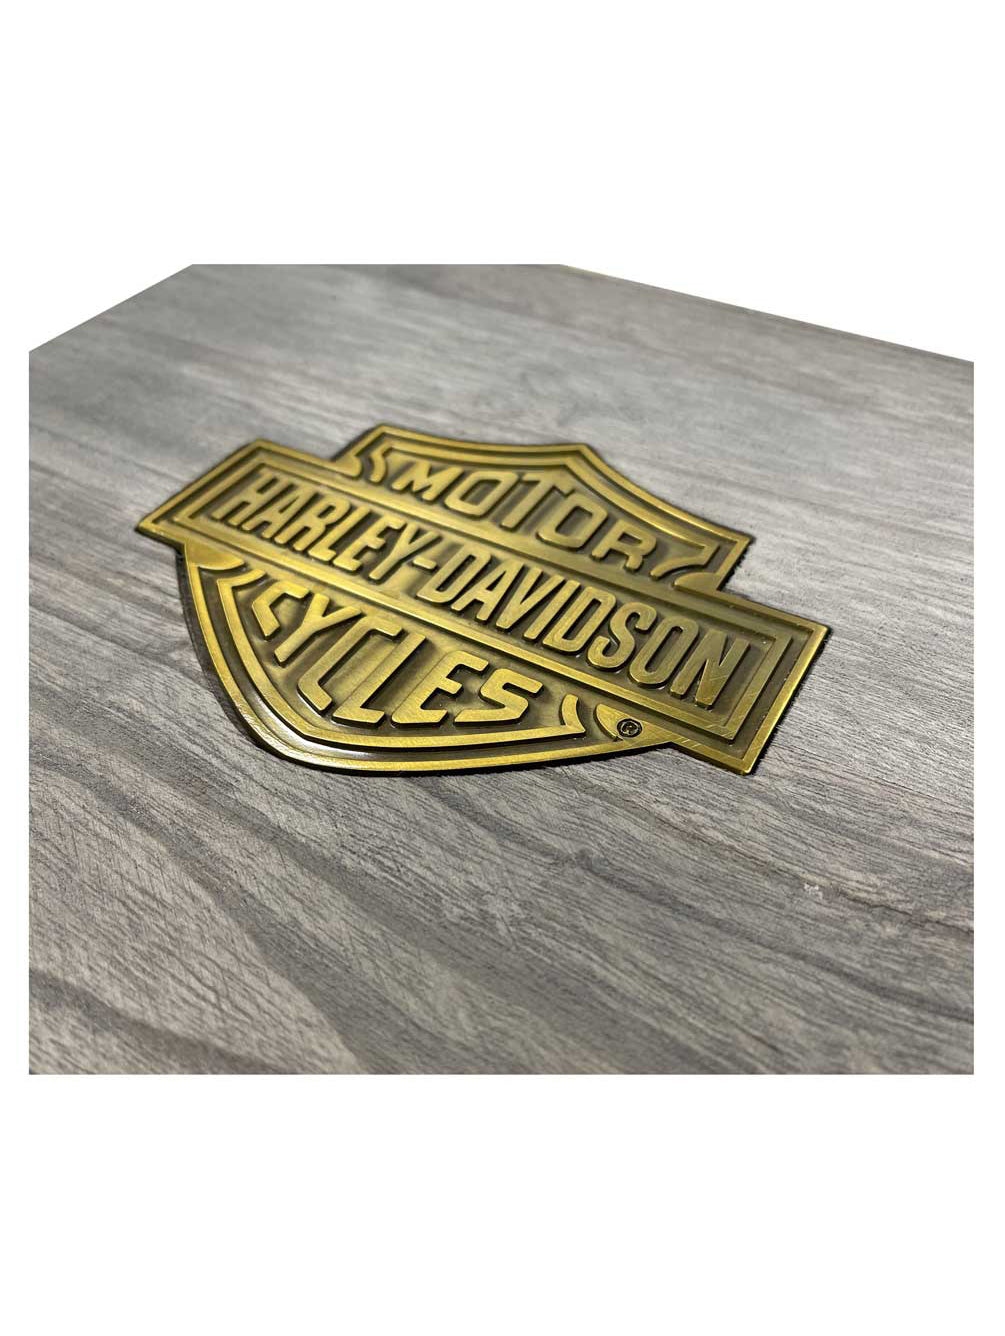 Harley-Davidson Premium Wine Gift Set - Two Wine Glasses, Stopper & Storage Box, Harley Davidson